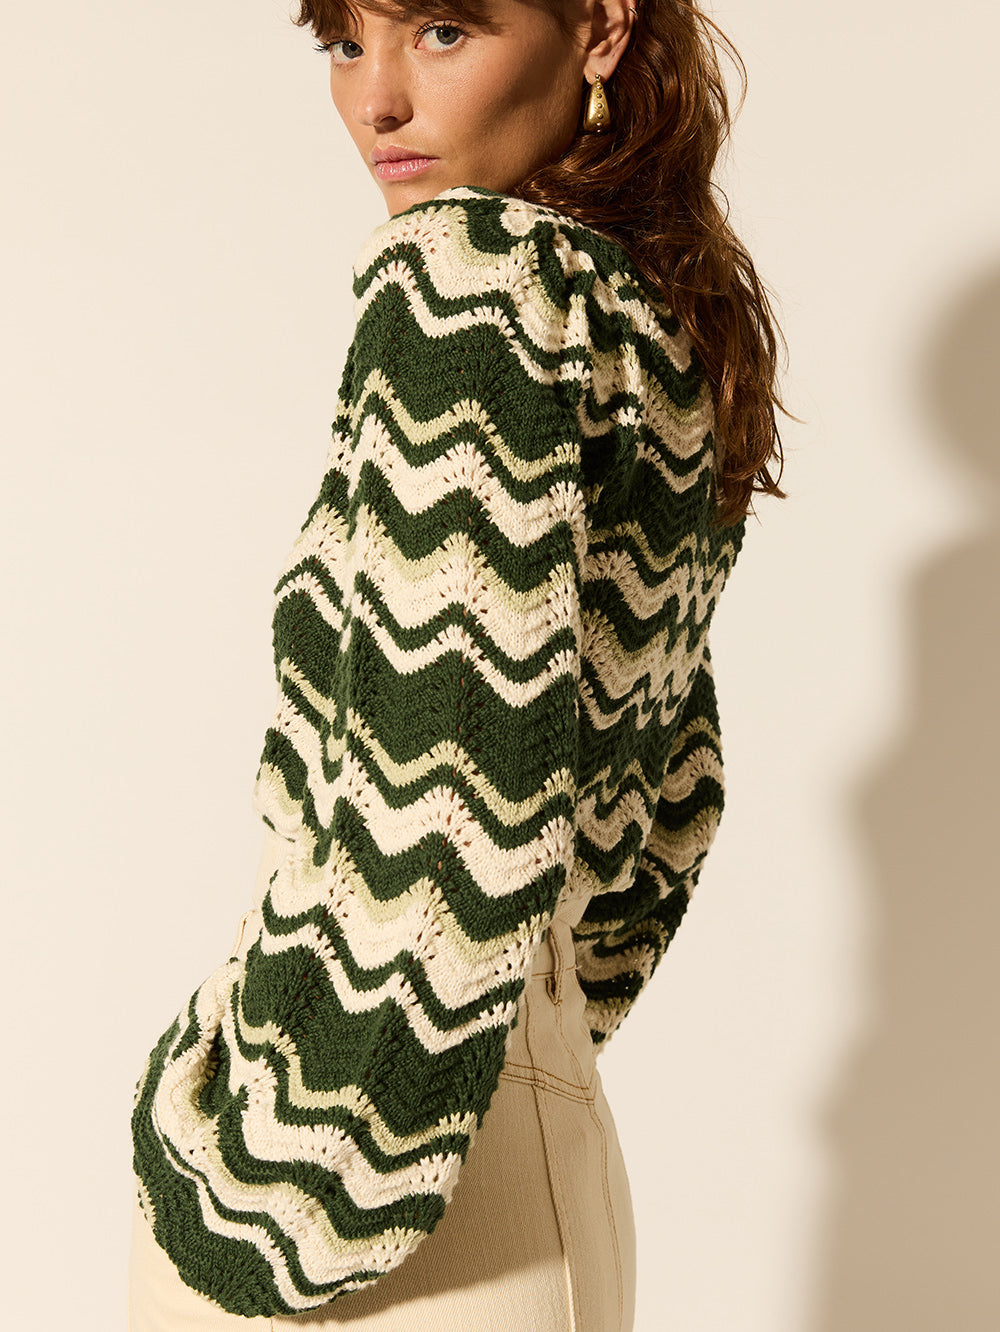 kivari - marcella knit top - green wave